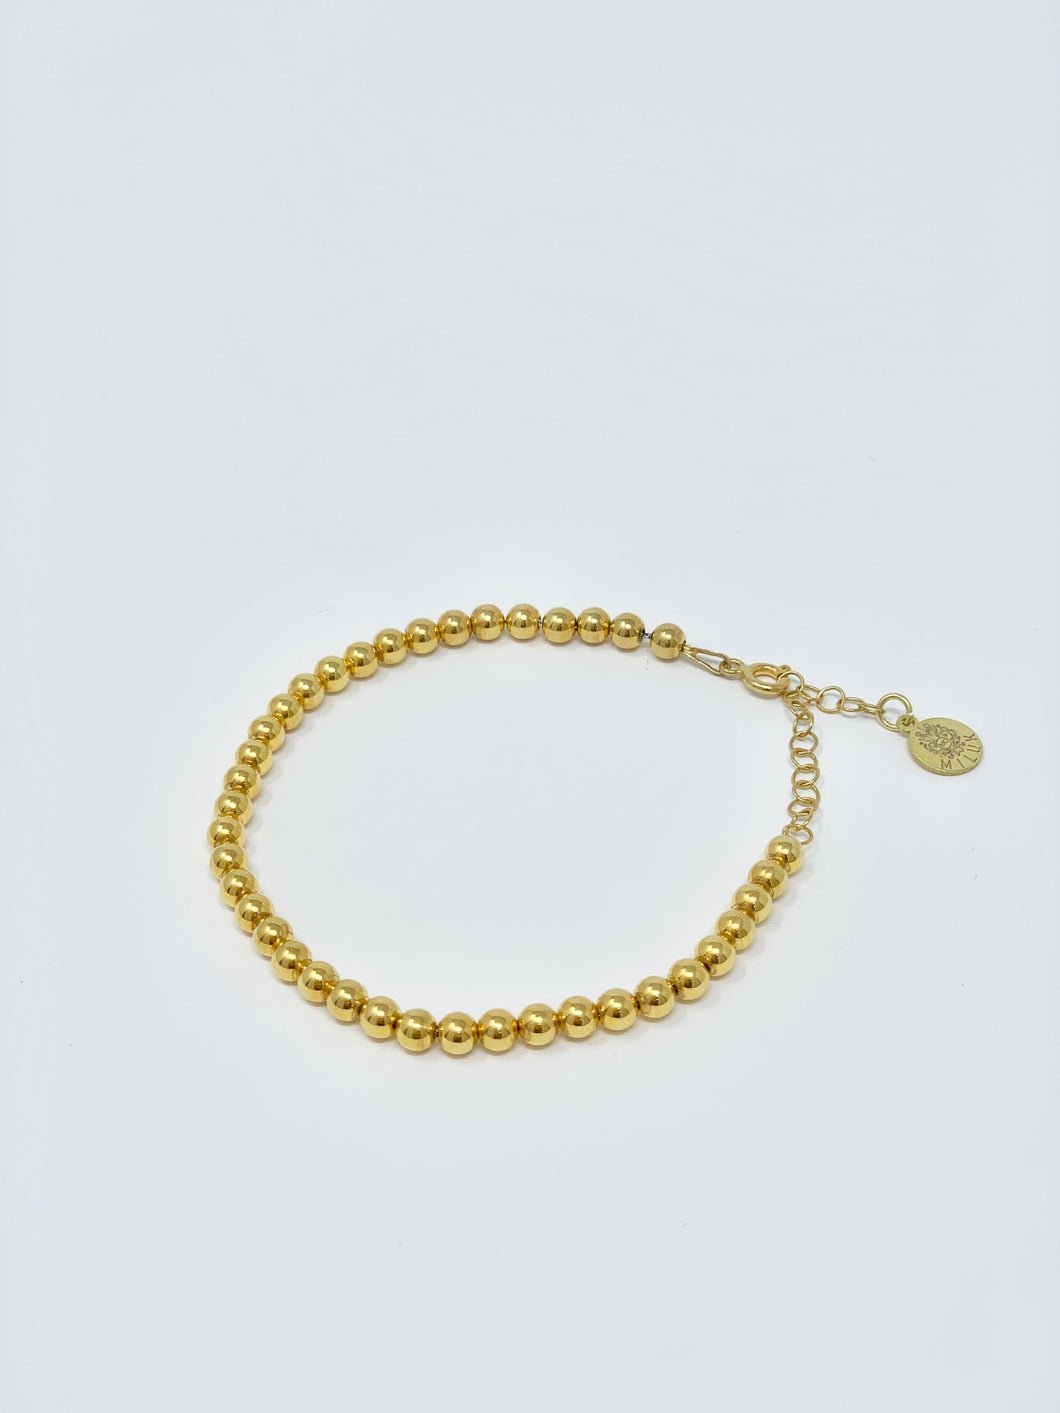 Sterling Silver Sphere chain bracelet - 4mm beads